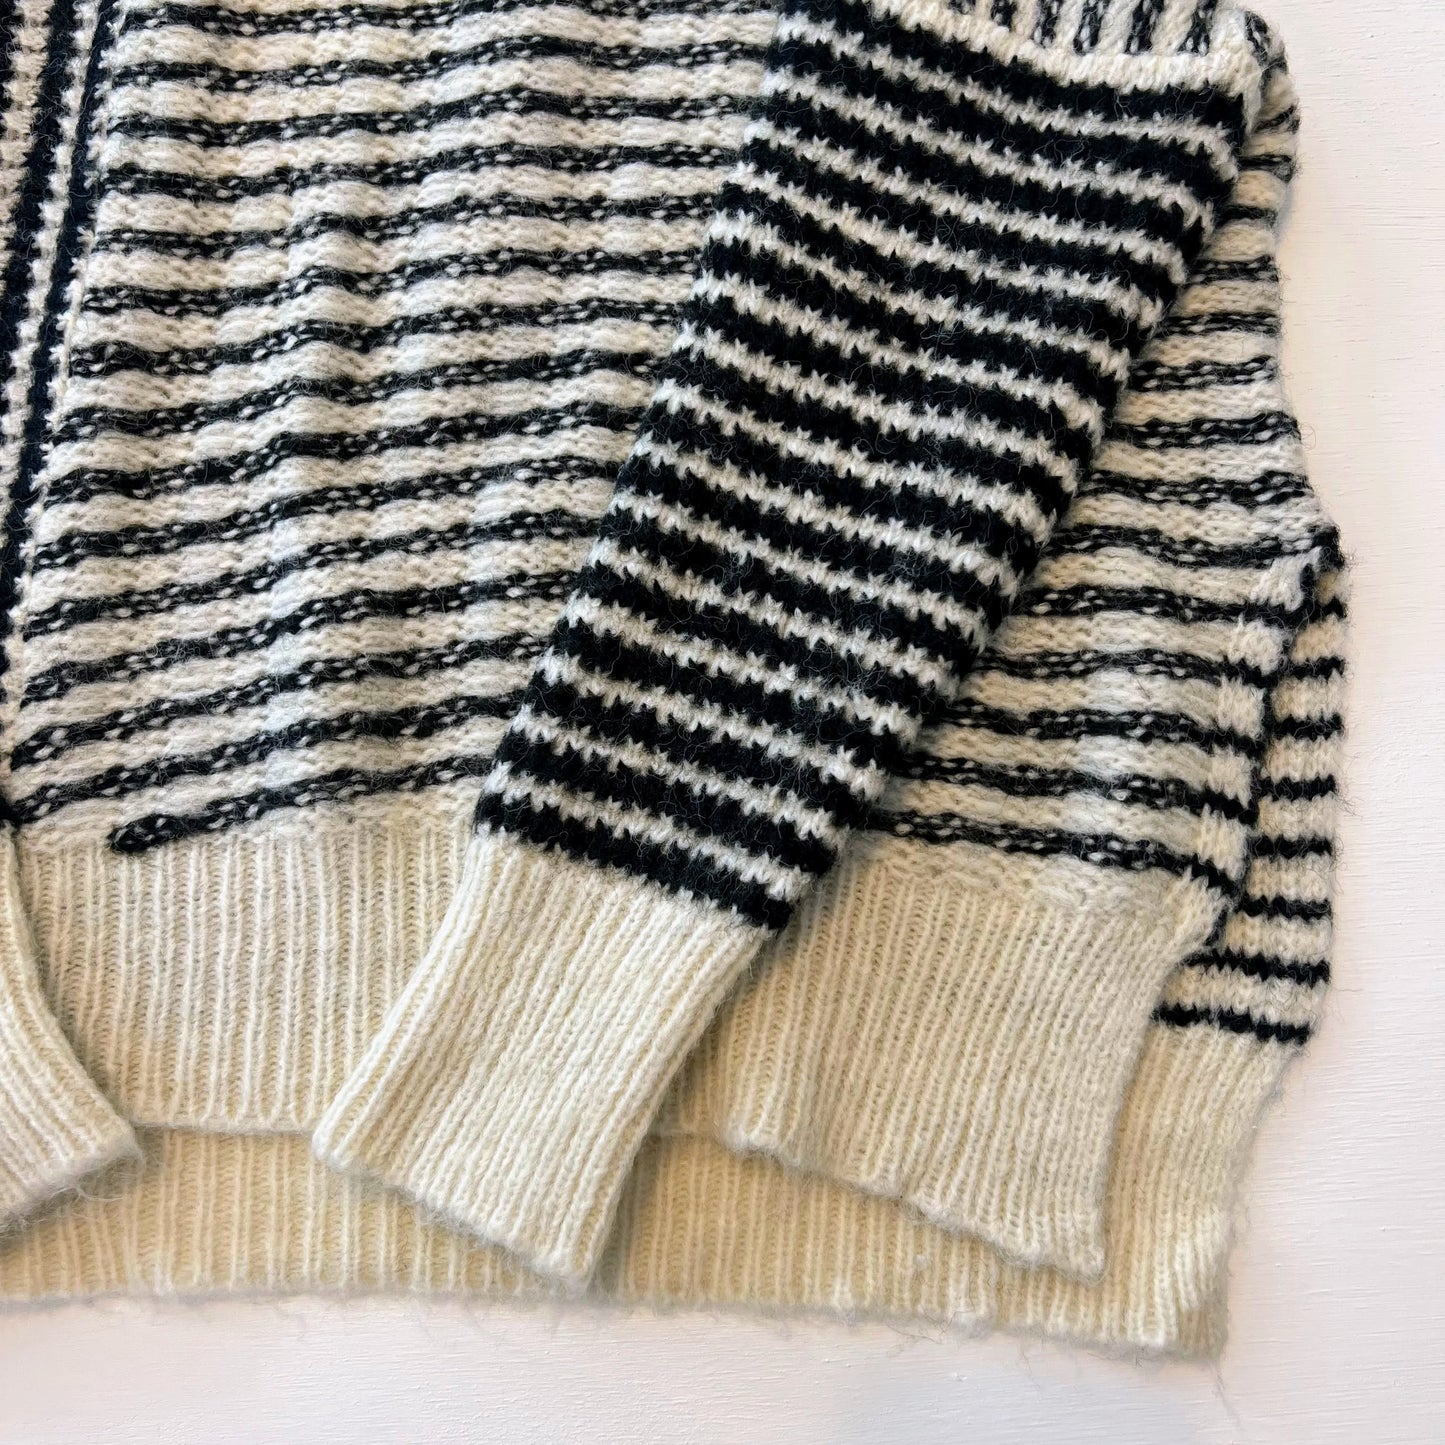 Ashley Asymmetrical Striped Sweater